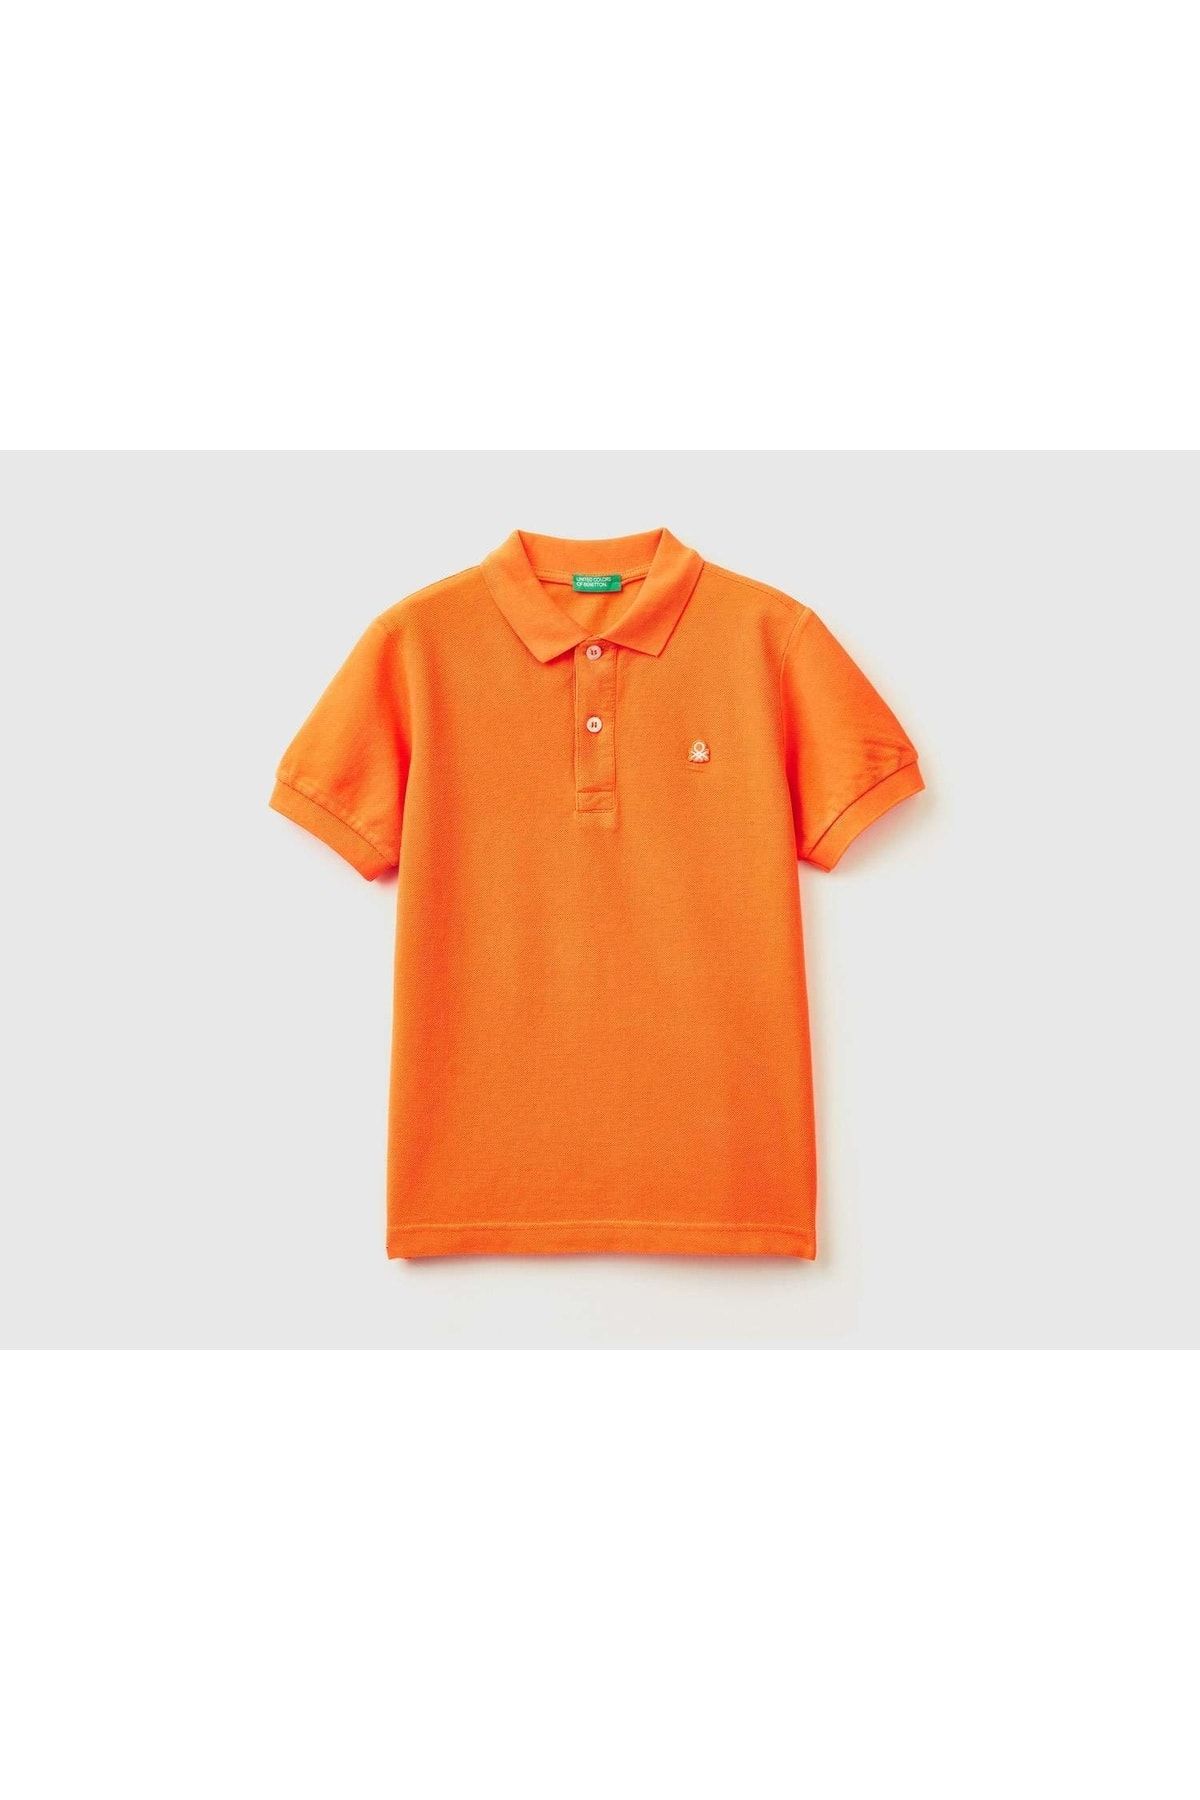 United Colors of Benetton Erkek Çocuk Turuncu Logolu Polo T-shirt